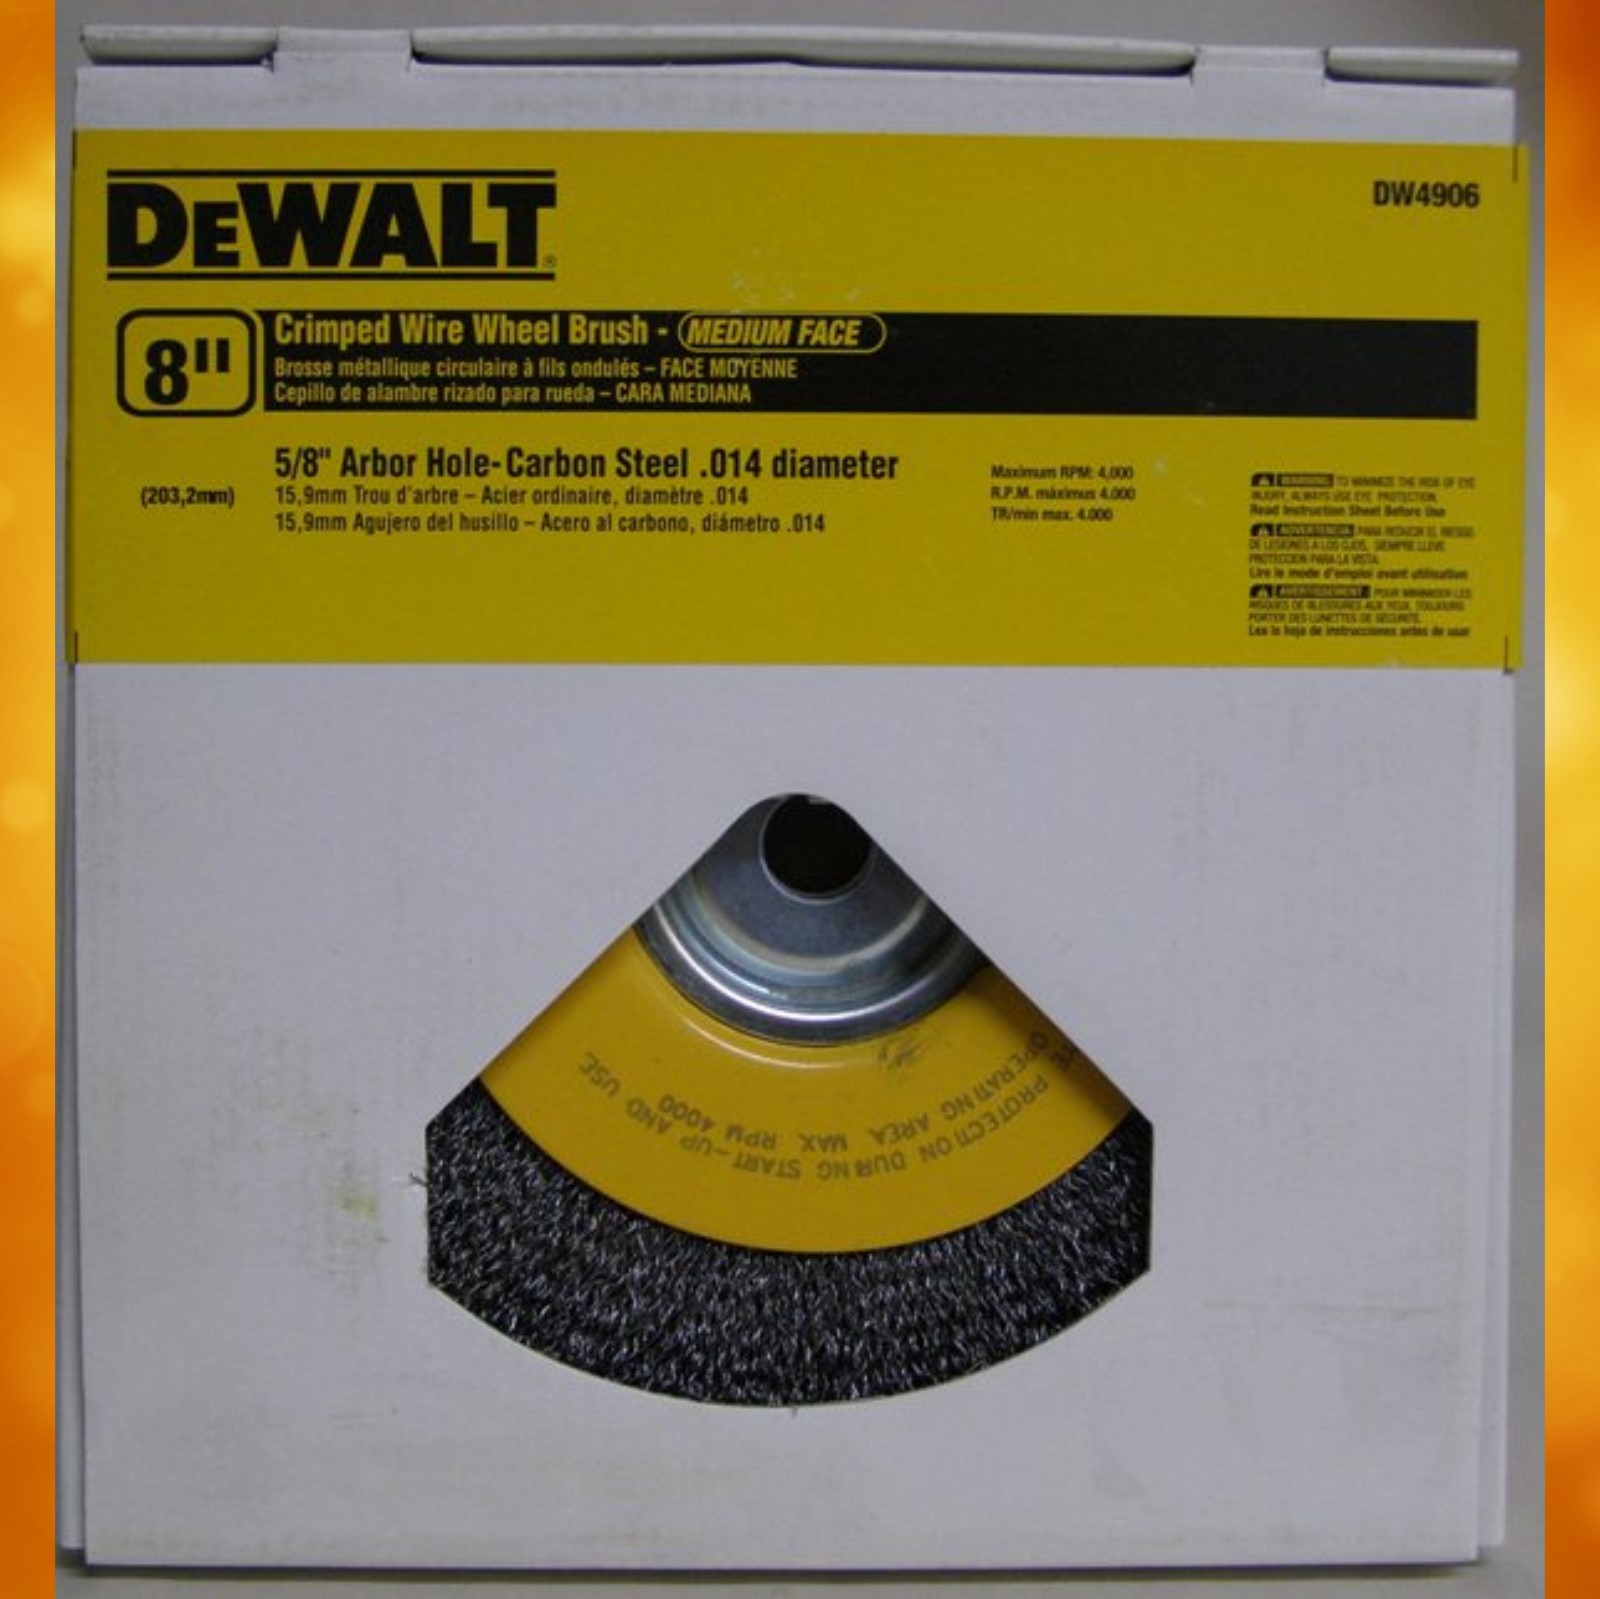 DeWalt 8" Crimped Bench Wire Wheel - 5/8" Arbor, 3/4" Face Width DW4906